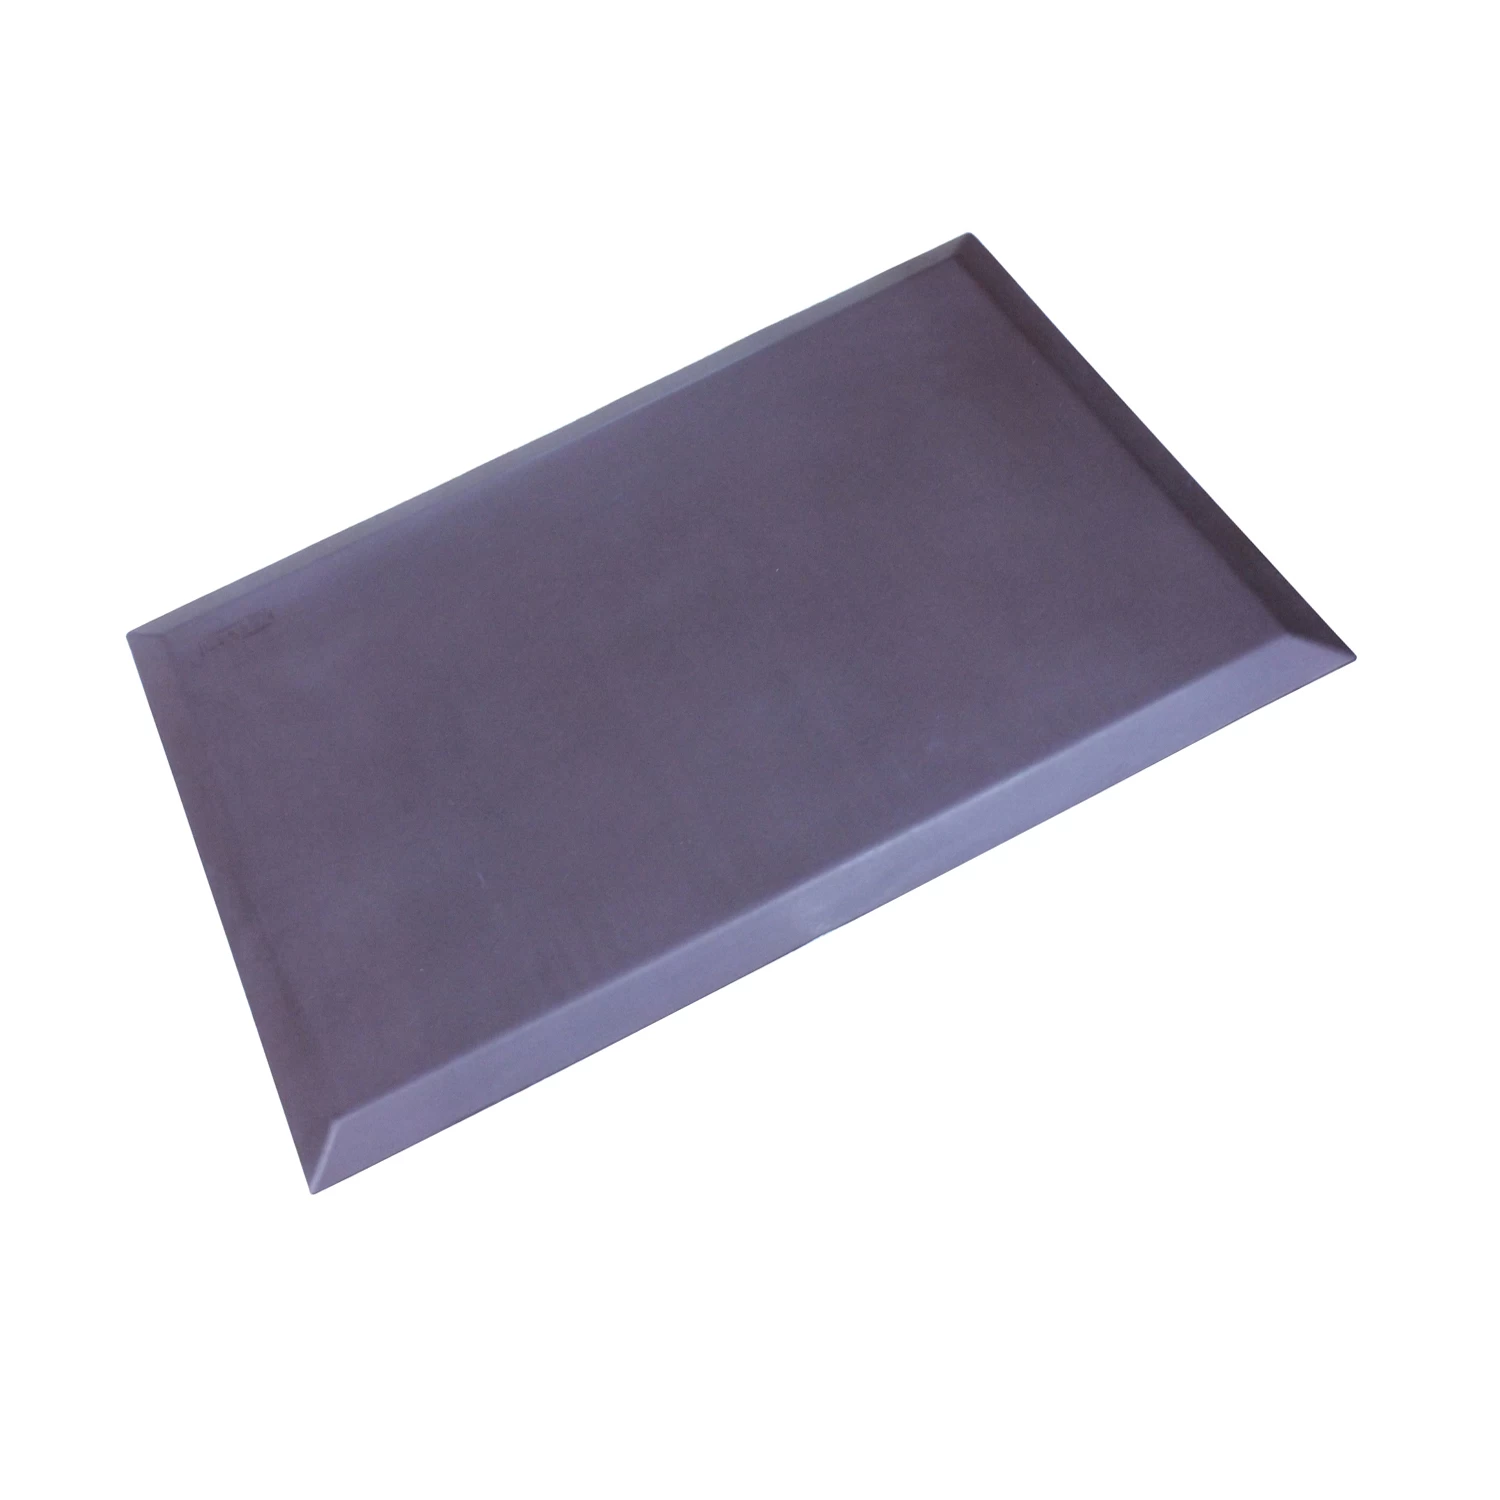 China Good Quality Pu Anti Fatigue Standing Desk Mat,PU floor mat,standing desk mat,anti-fatigue floor mat Hersteller